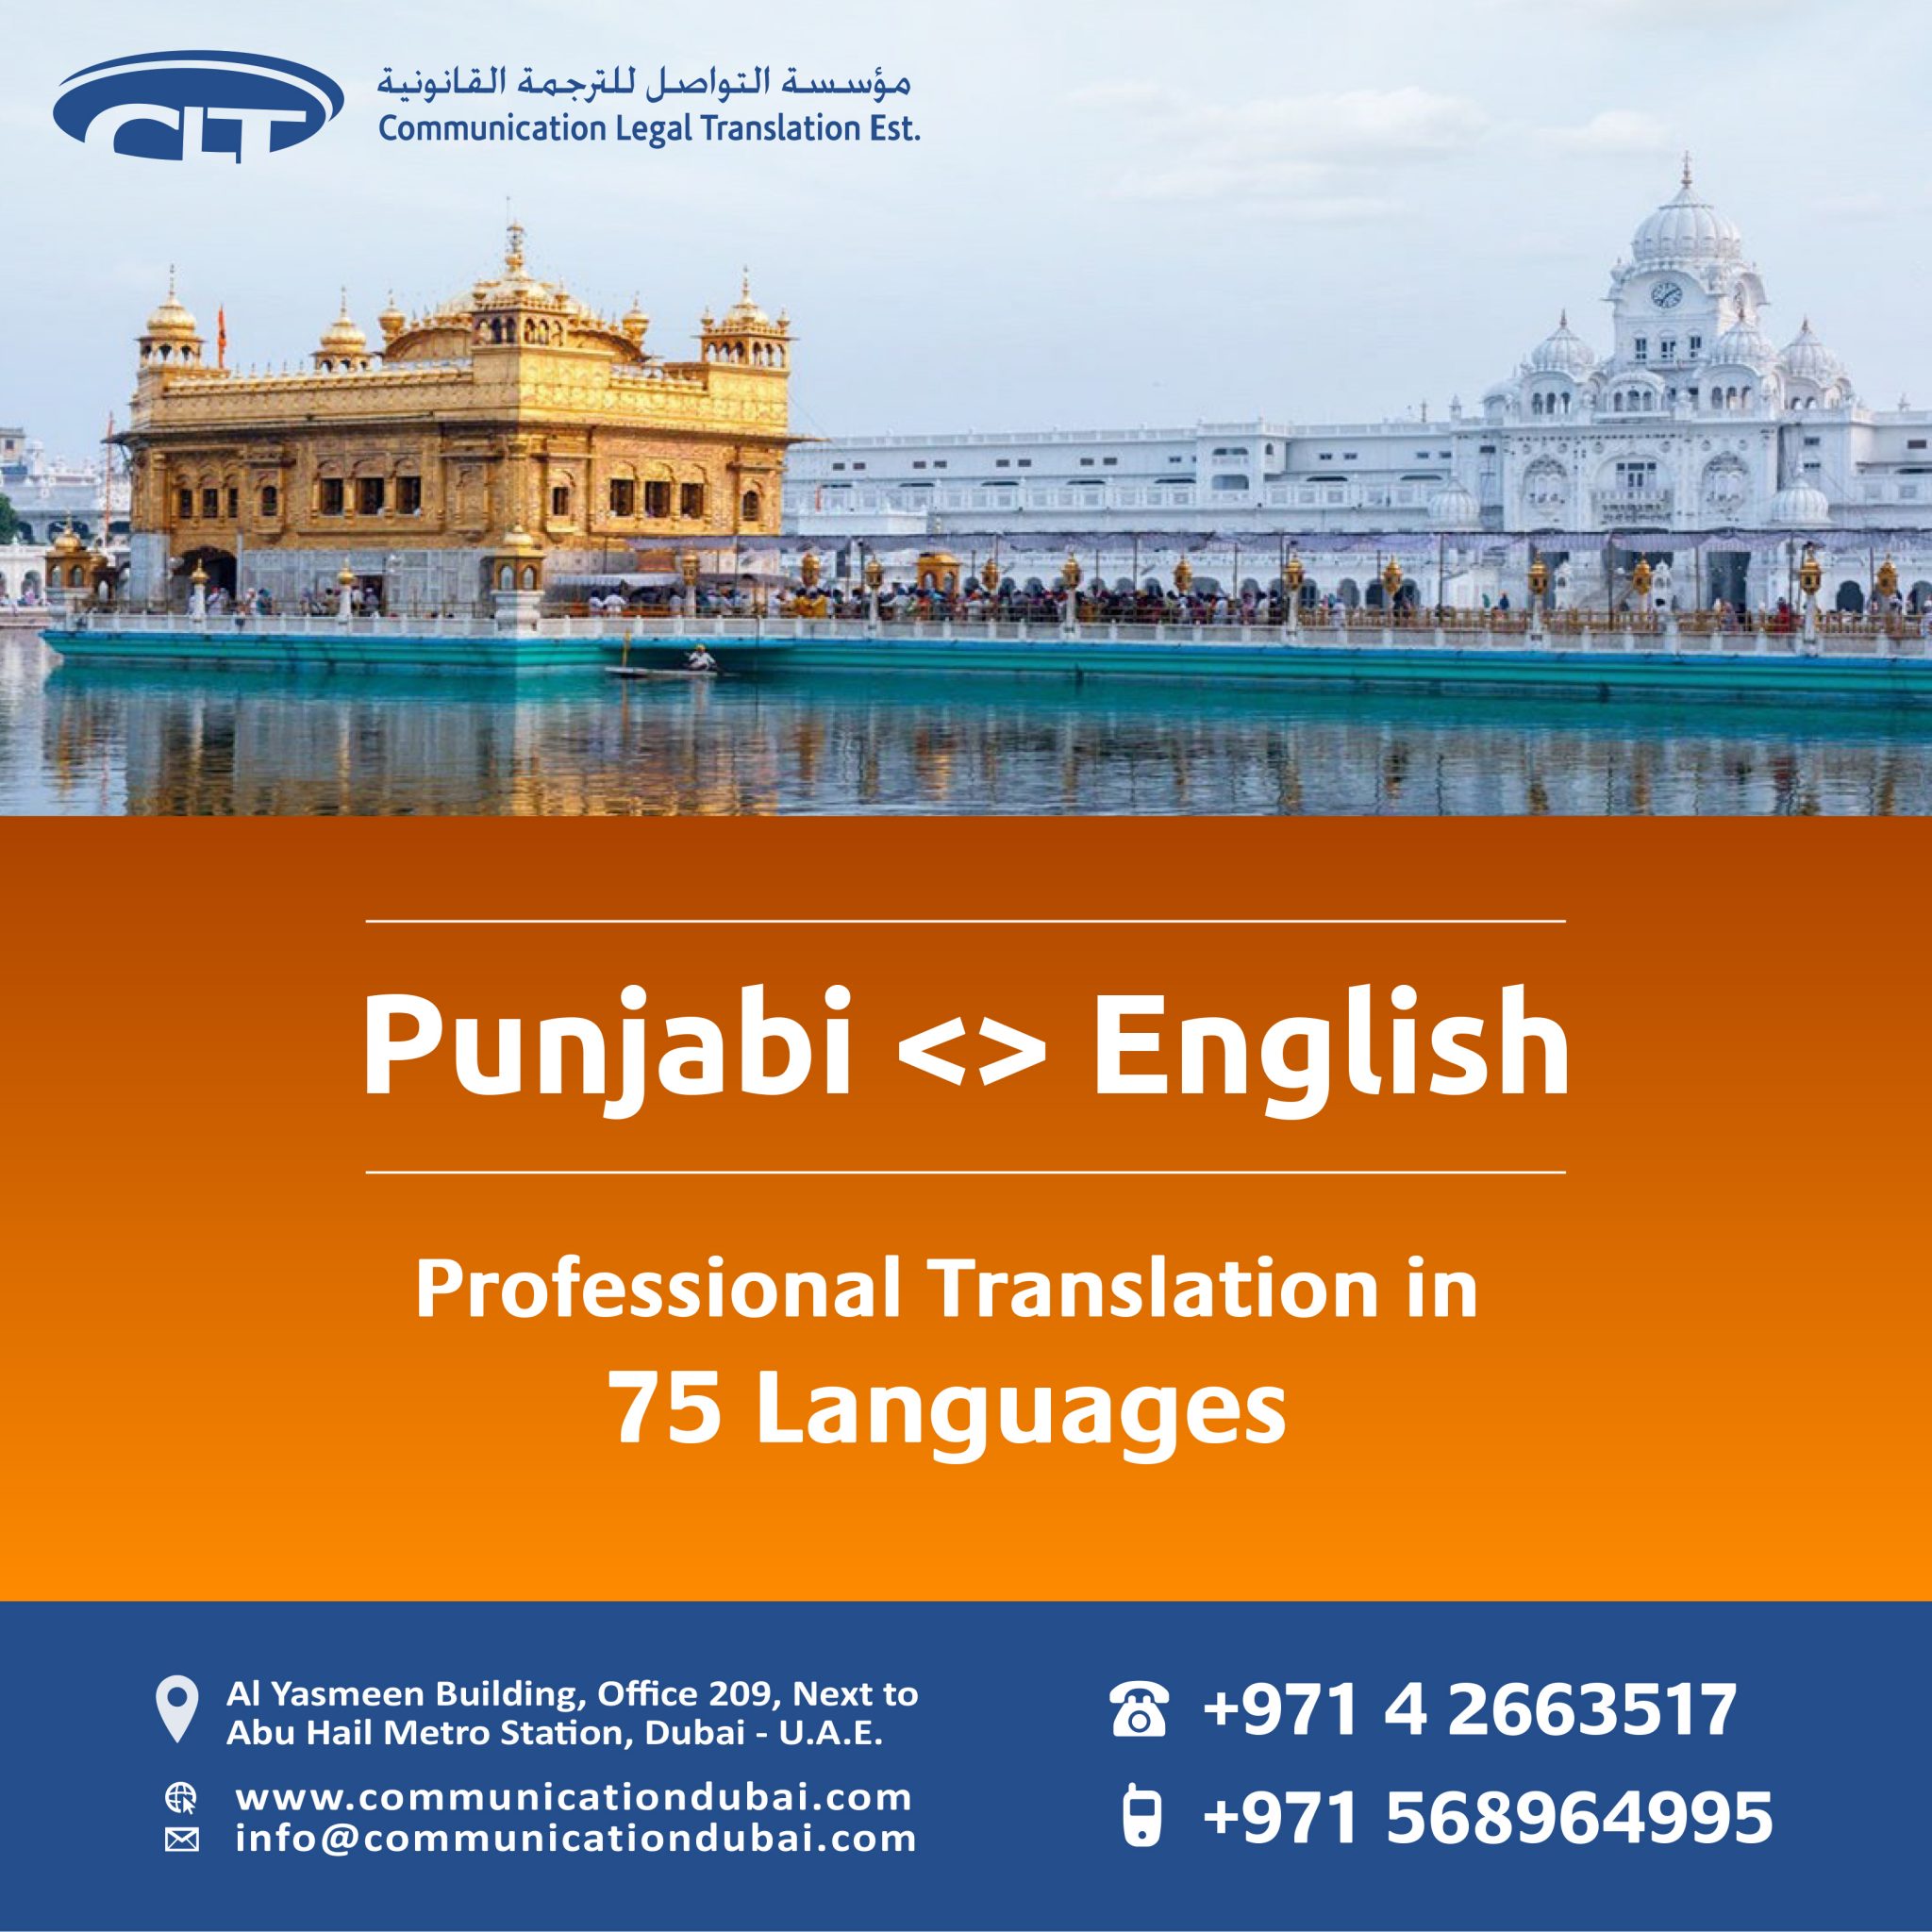 travel translation punjabi